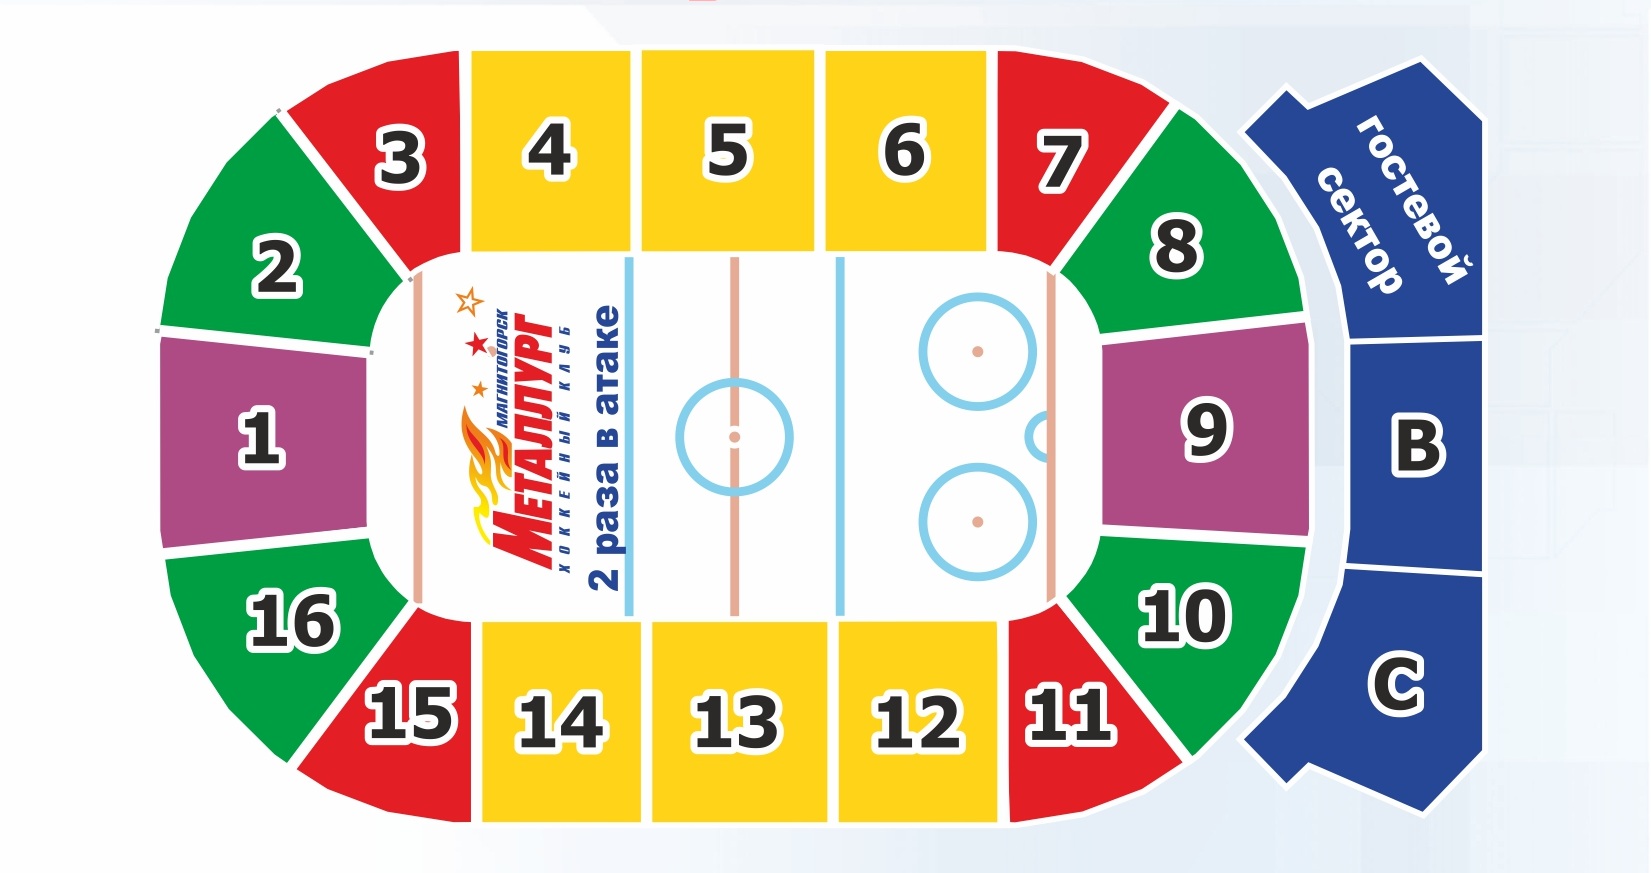 Металлург магнитогорск билеты на хоккей купить арена. Арена Металлург Магнитогорск сектора. Сектора на арене магнитогорского металлурга.